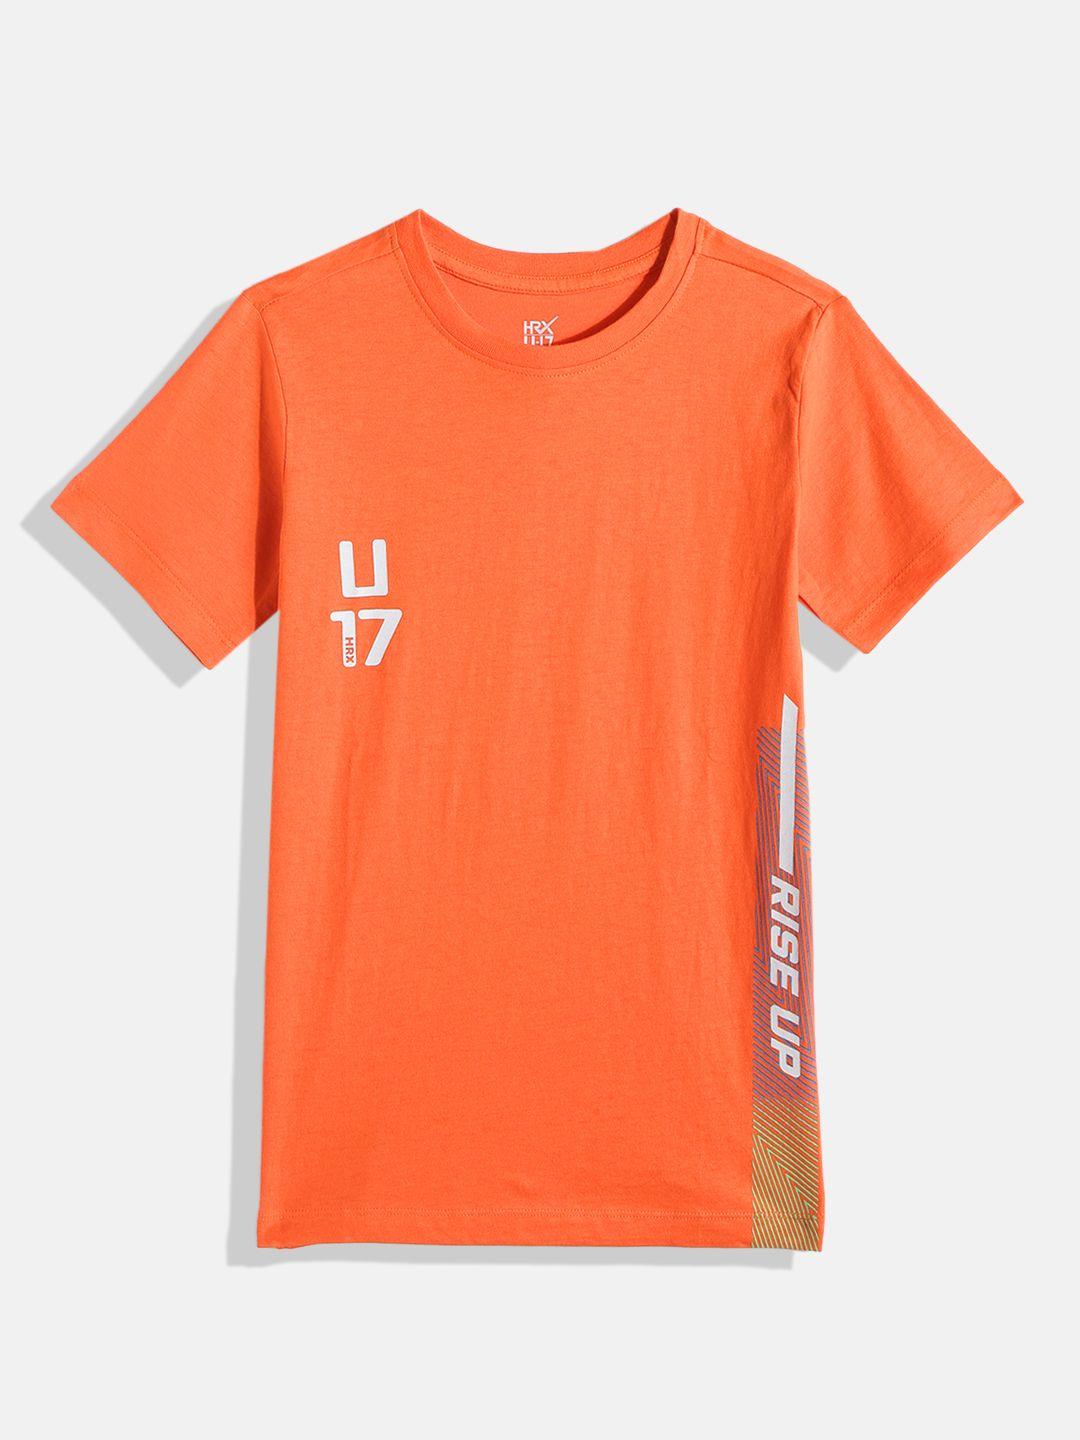 hrx by hrithik roshan boys orange typography printed pure cotton t-shirt